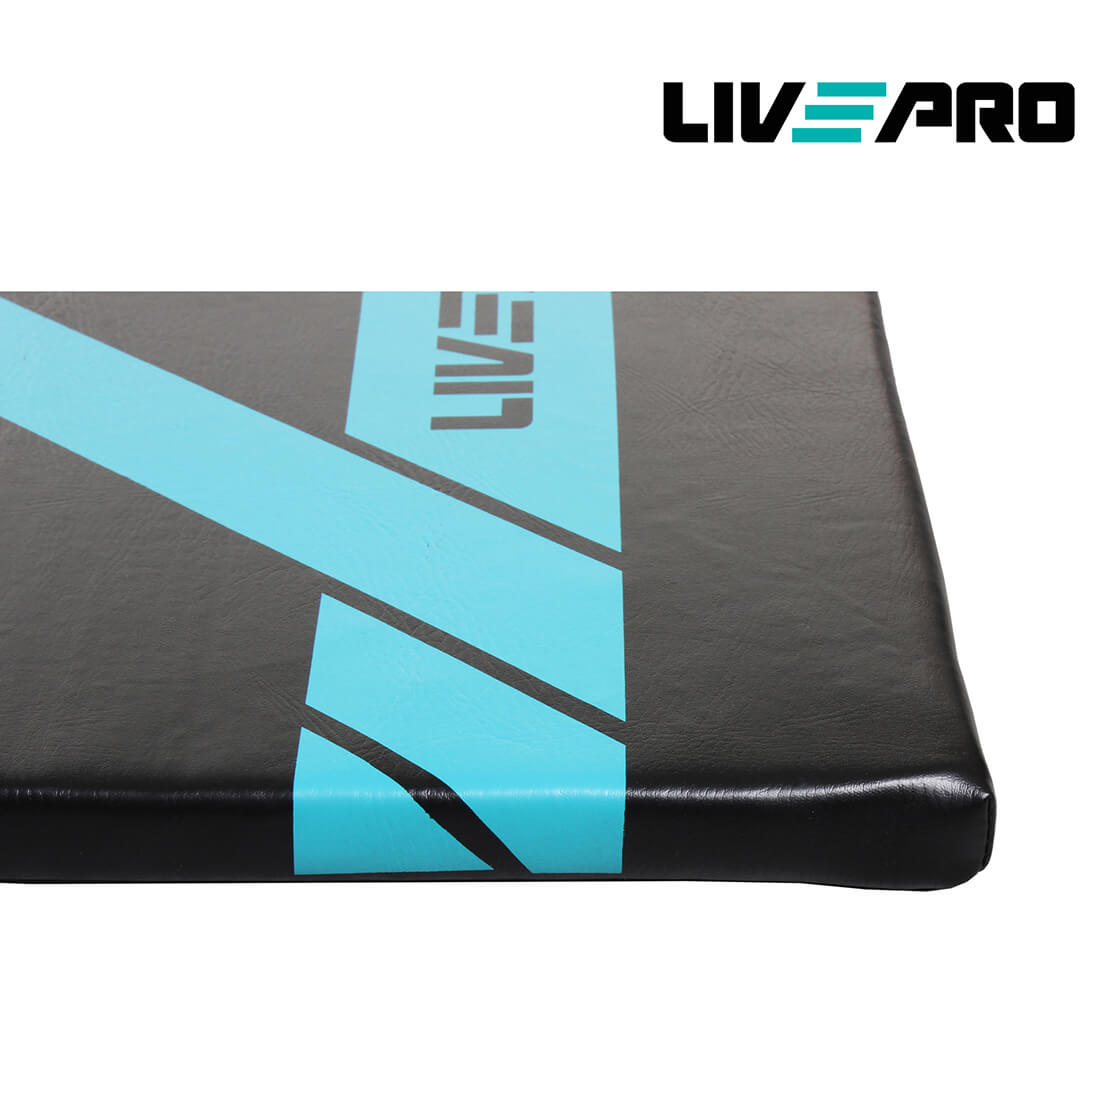 LIVEPRO Multi Purpose Stretch Mat | Sole Fitness Singapore